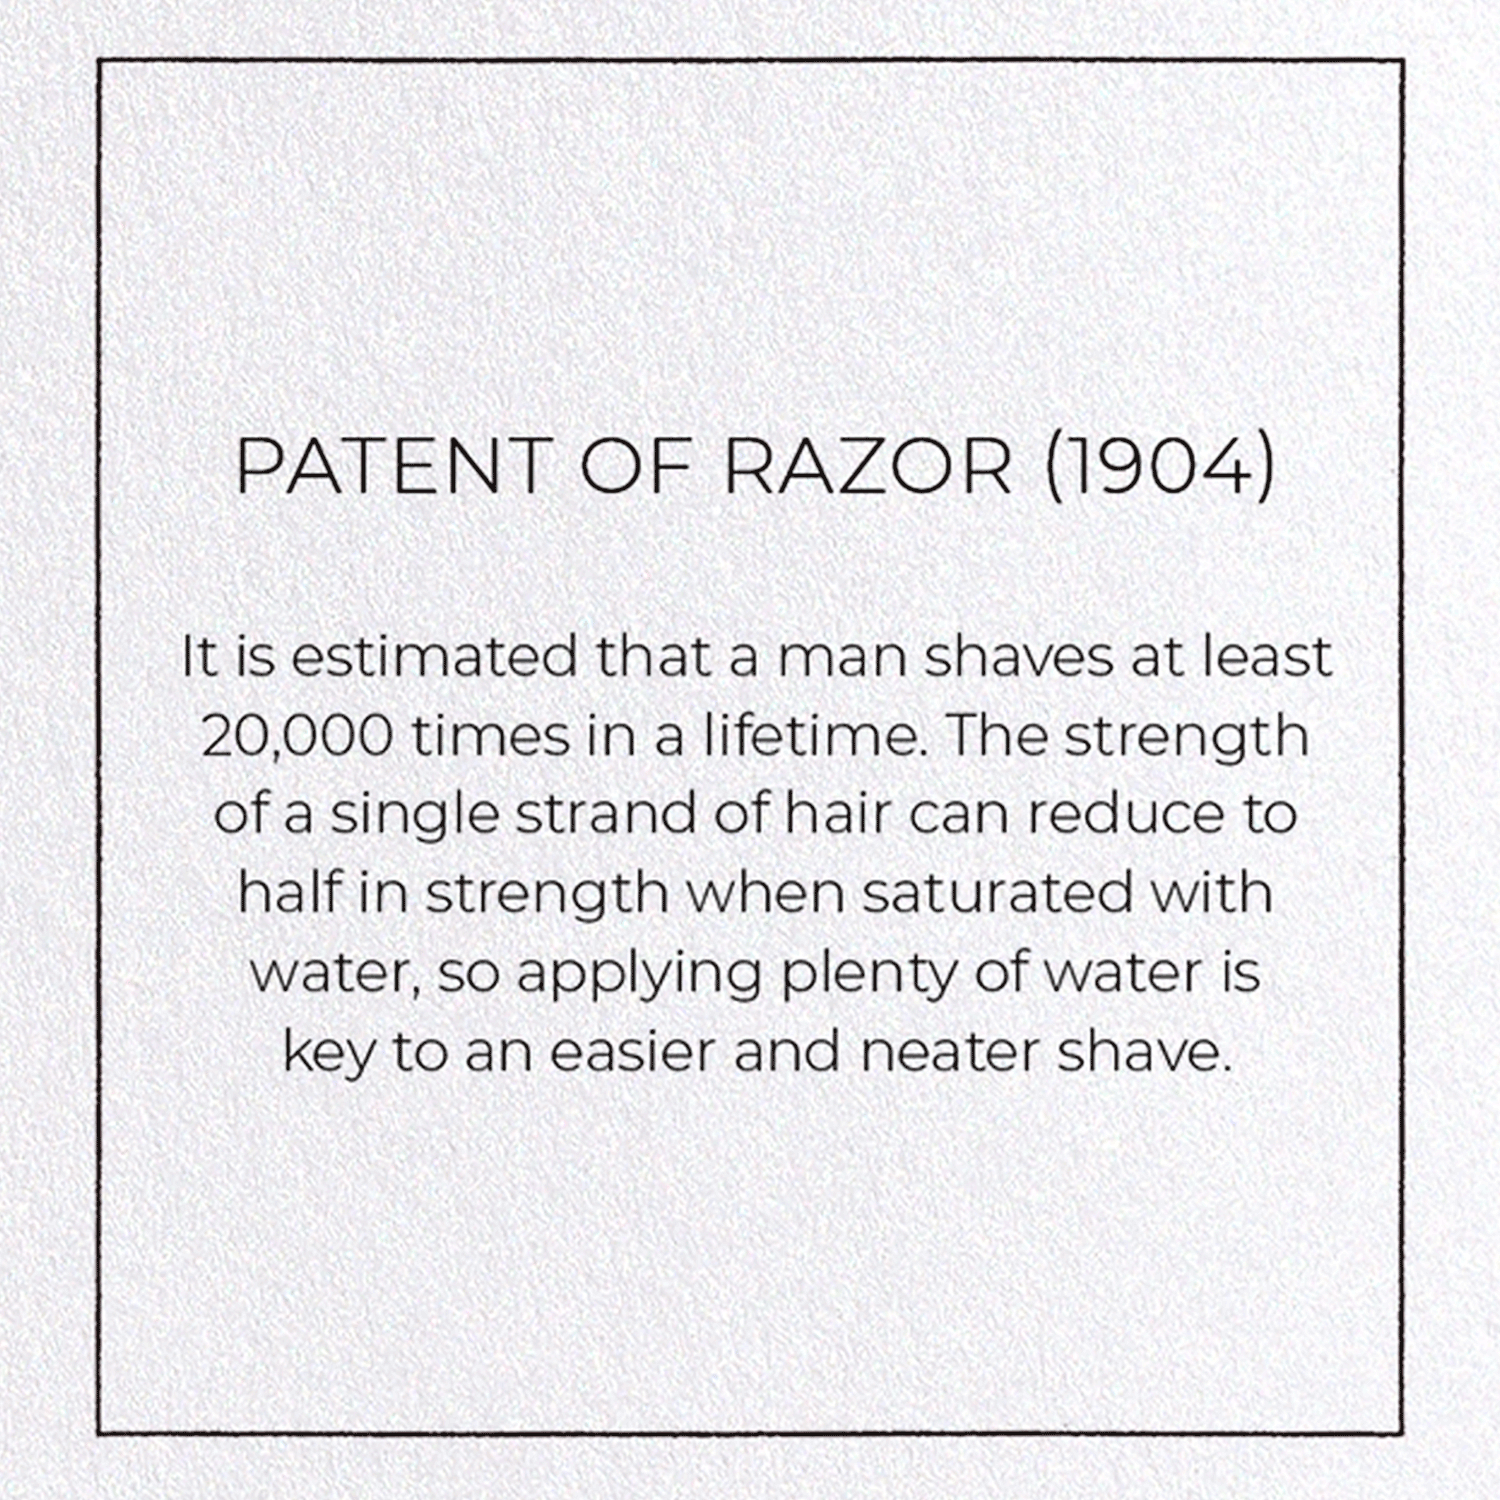 PATENT OF RAZOR (1904)